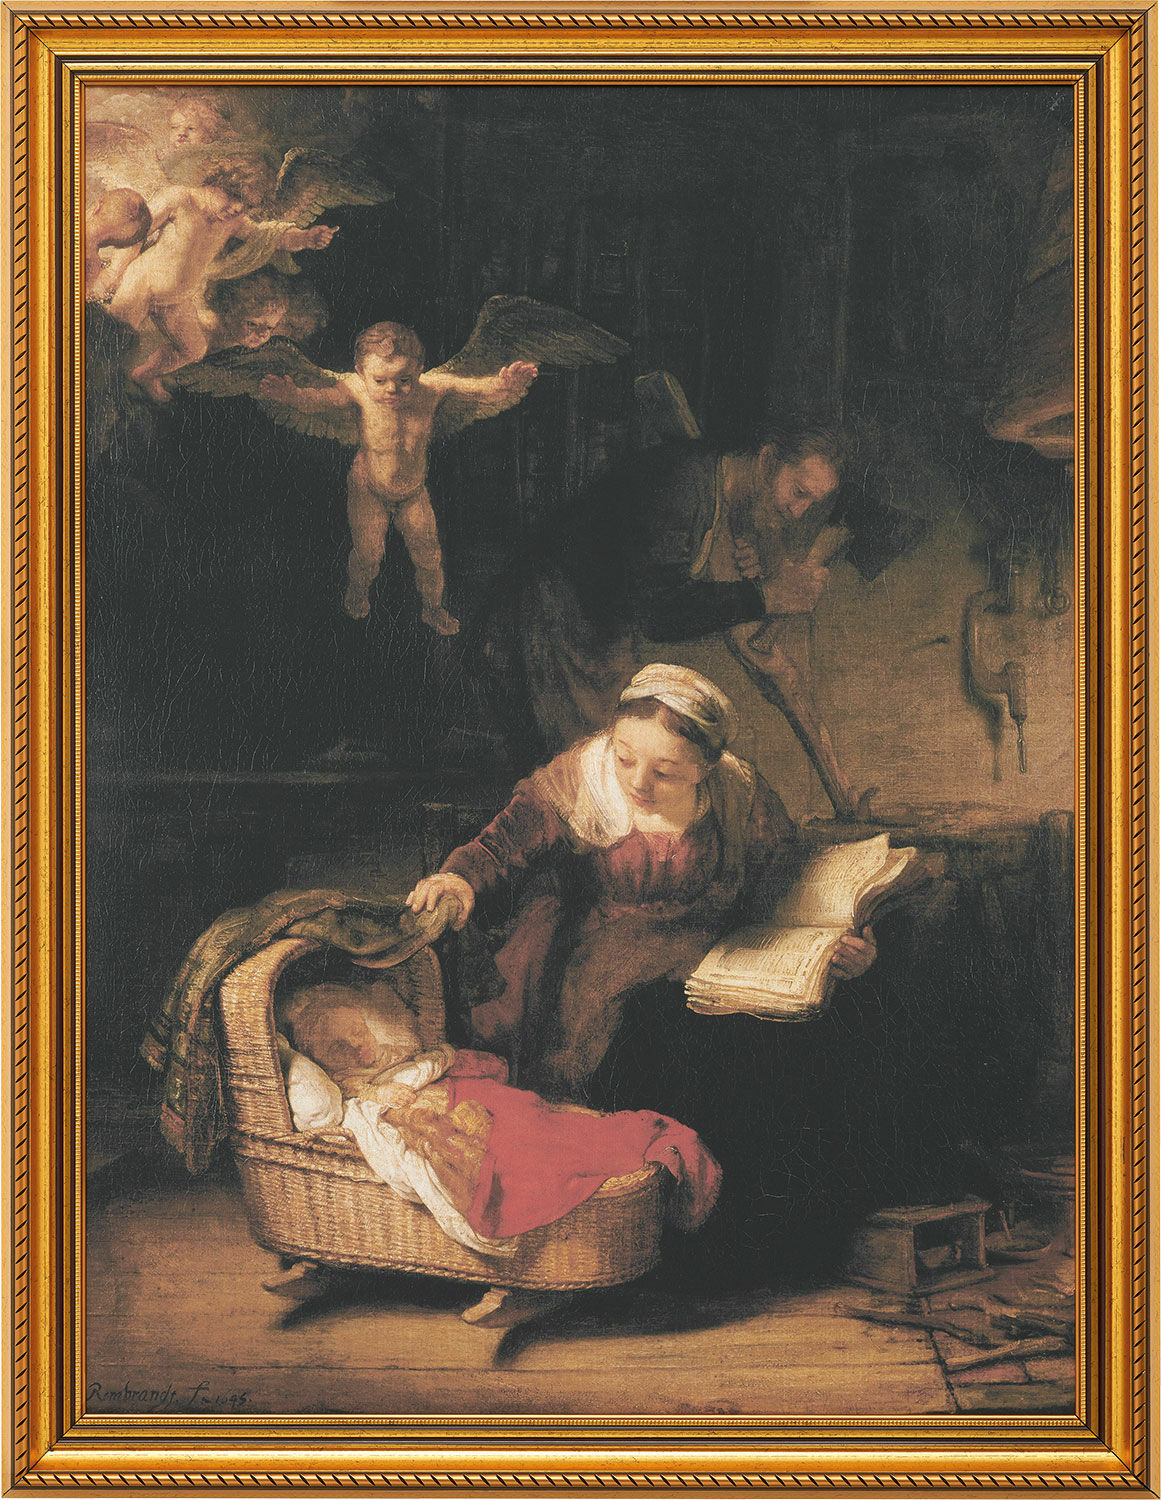 Billede "Den hellige familie" (1645), indrammet von Rembrandt